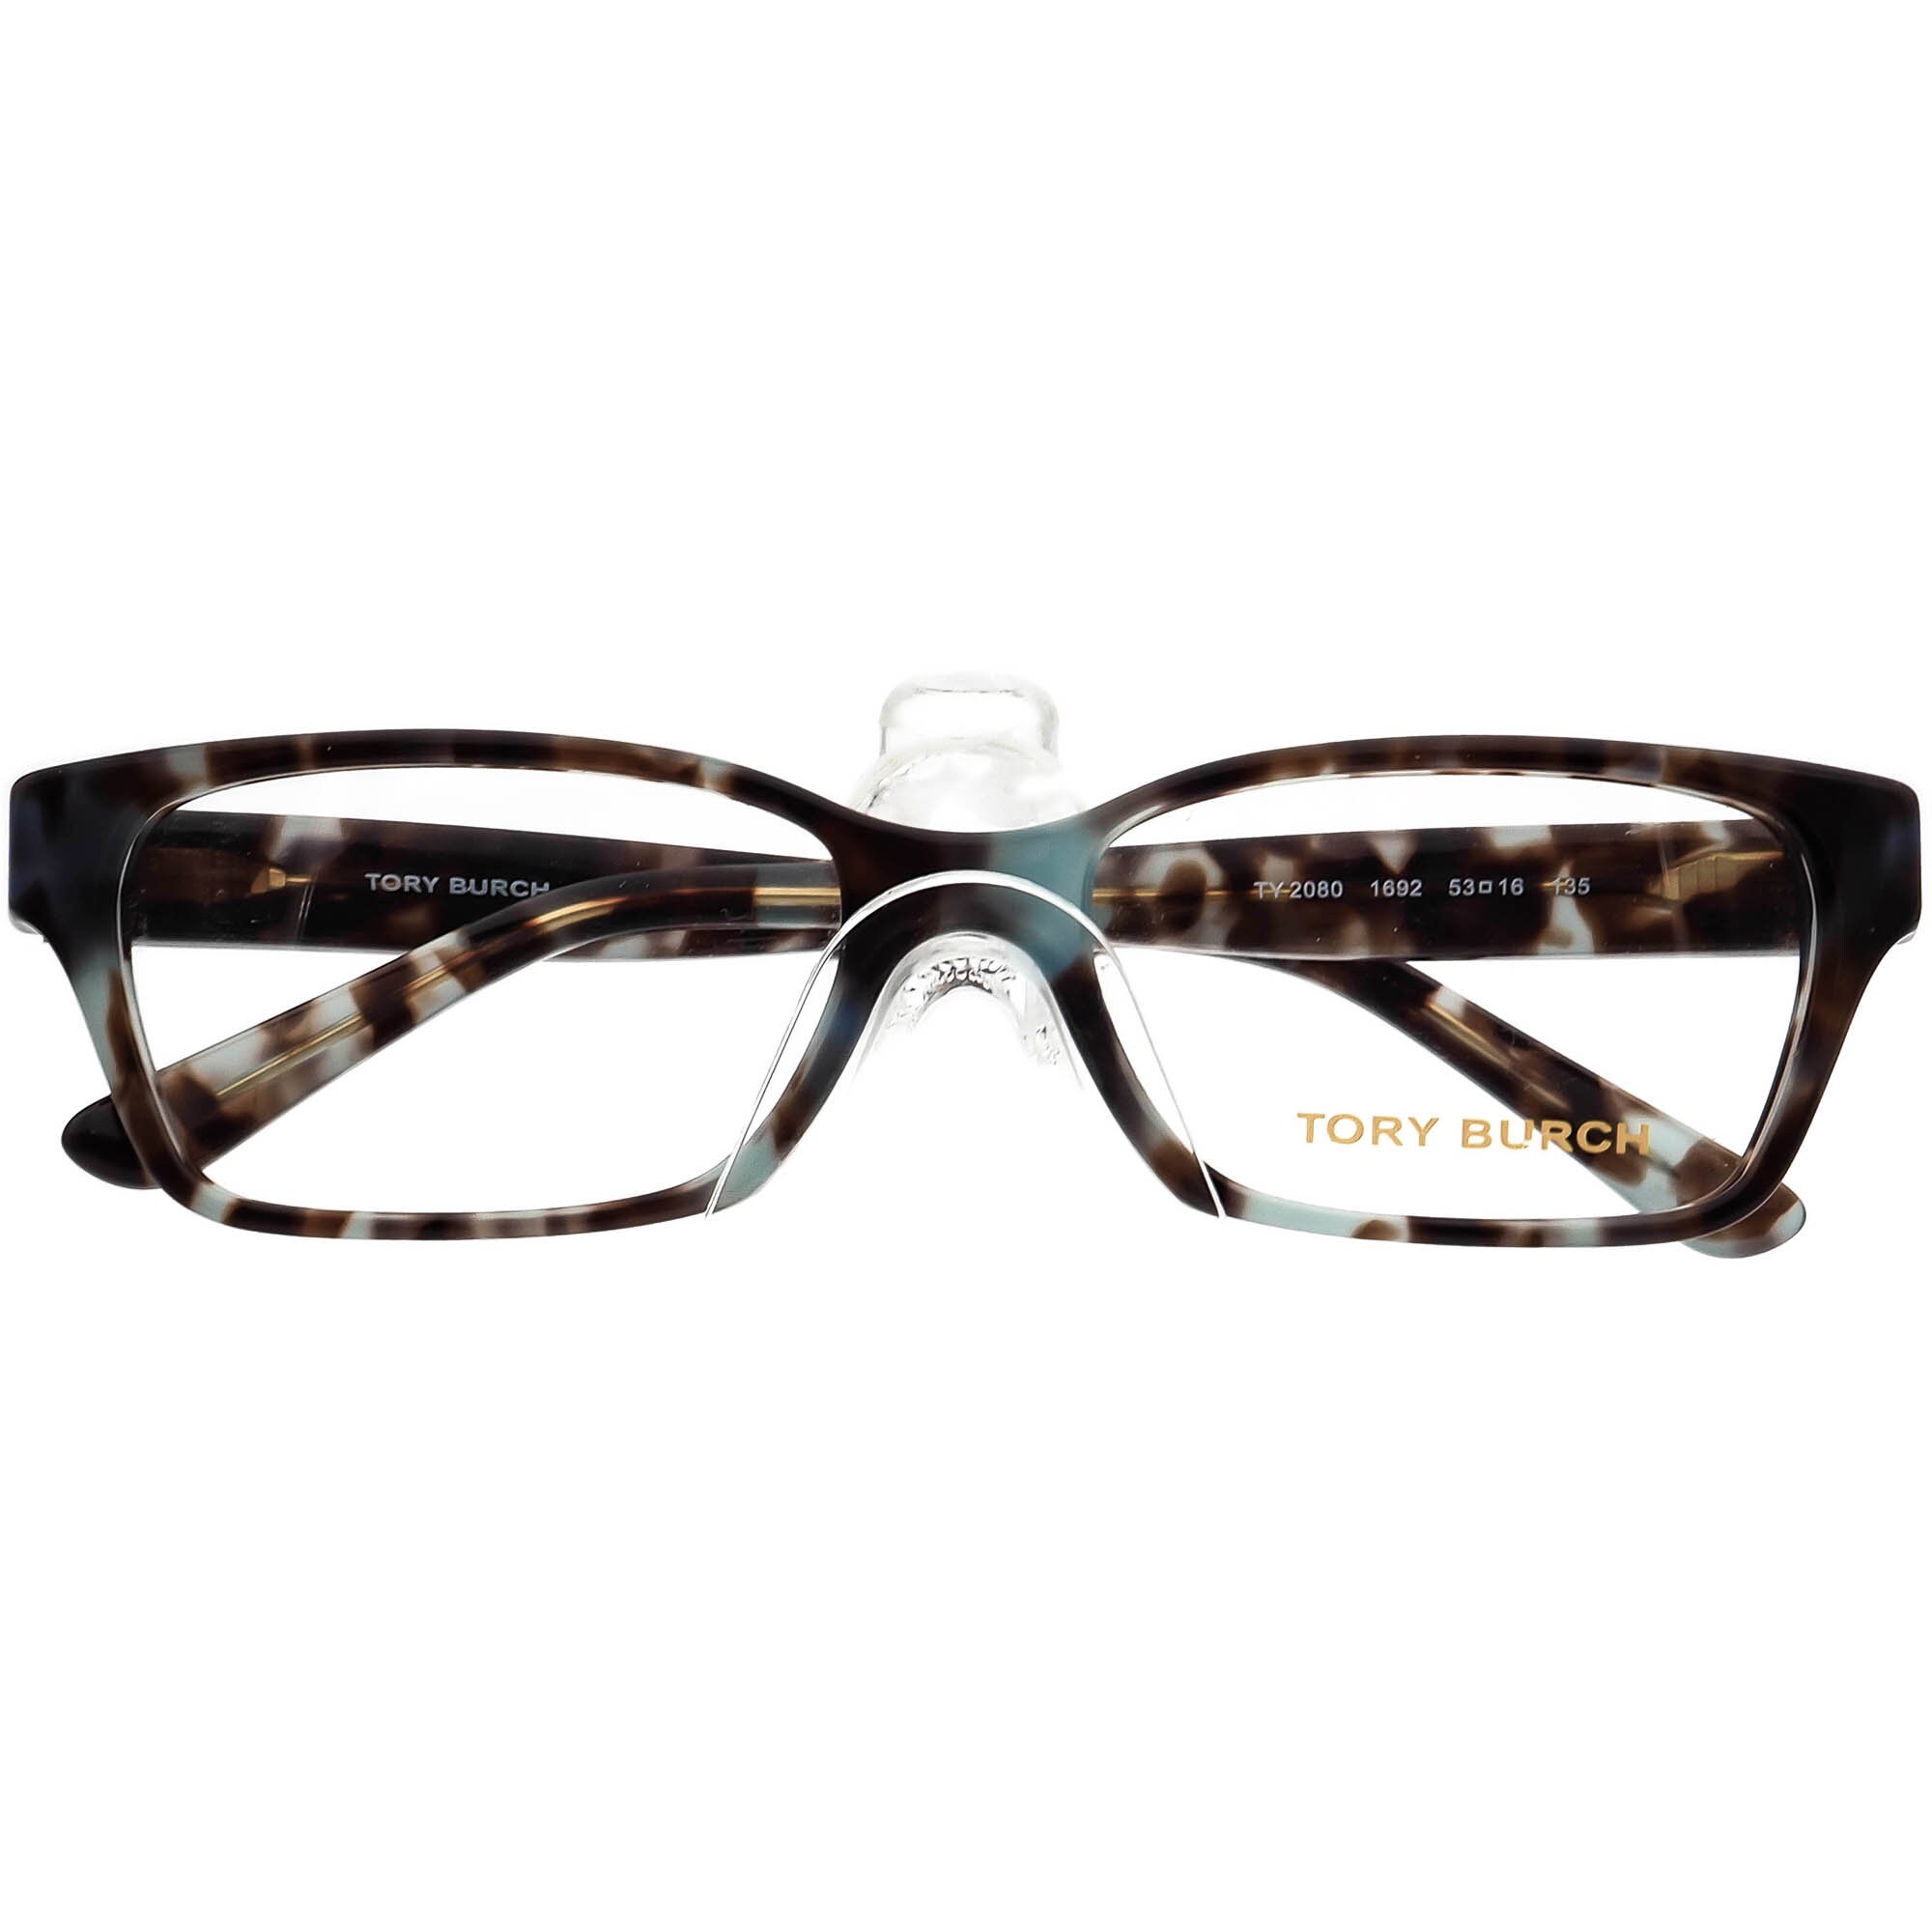 Oakley Women's Eyeglasses TY 2080 1692 Blue Tortoise - Etsy Norway